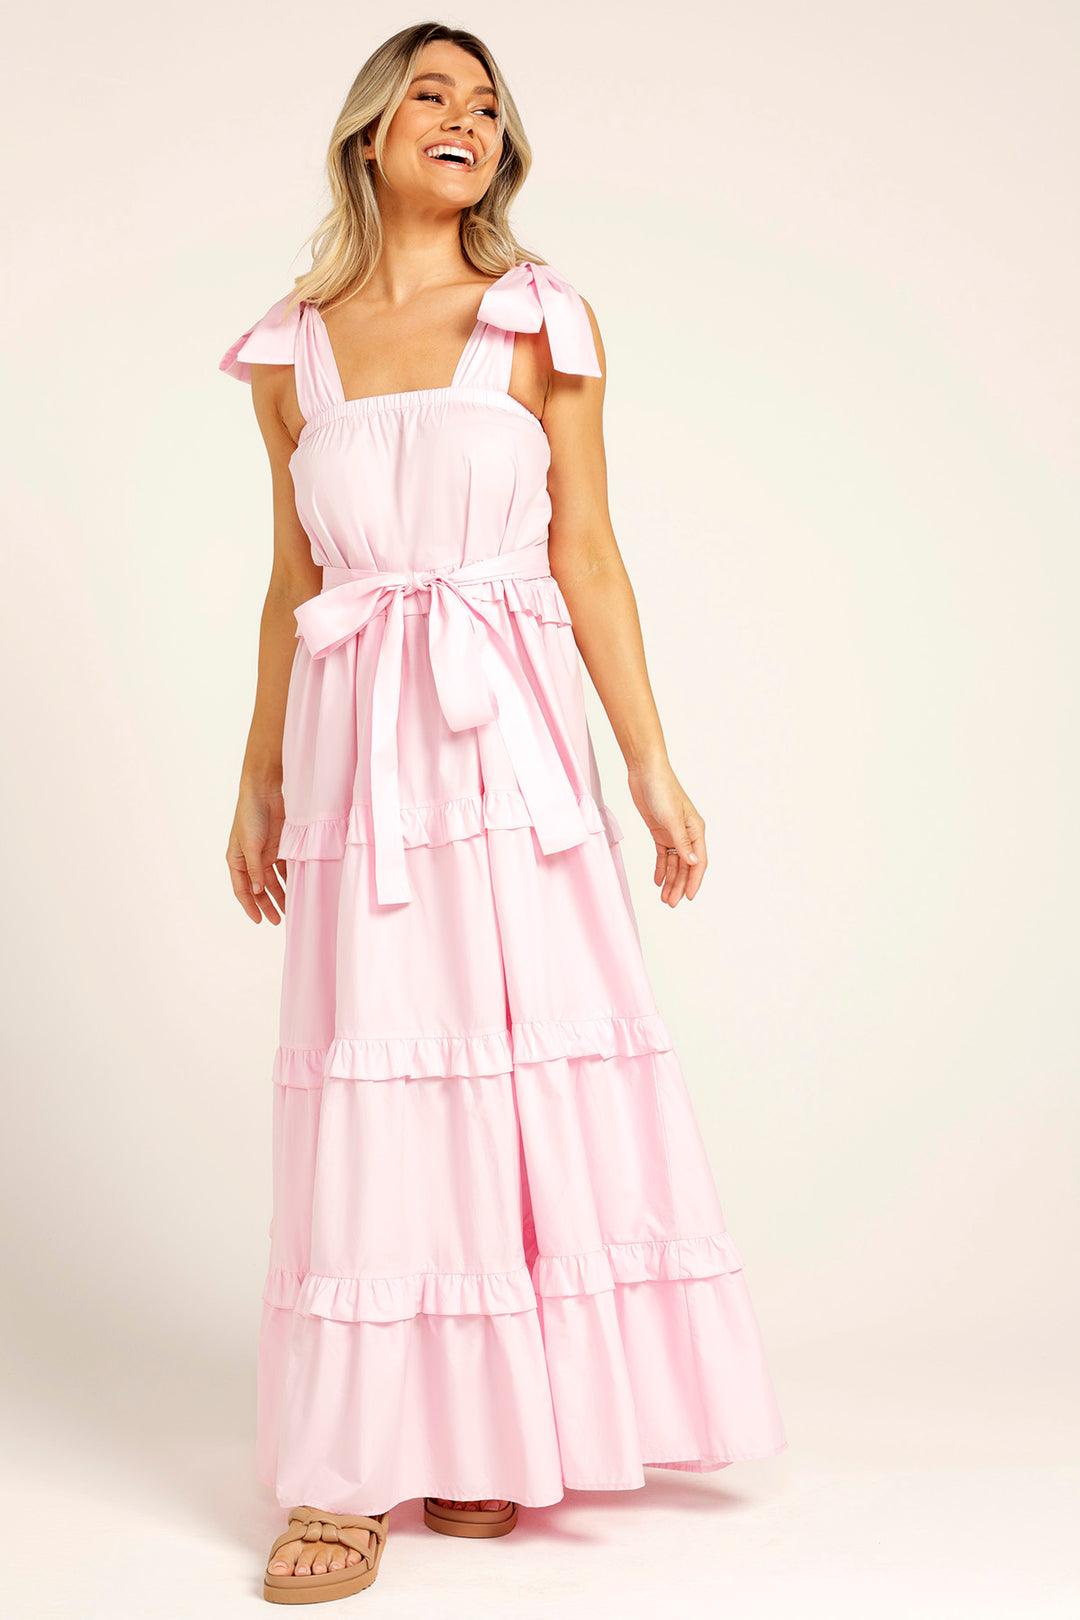 Scallop Dress - Soft Pink